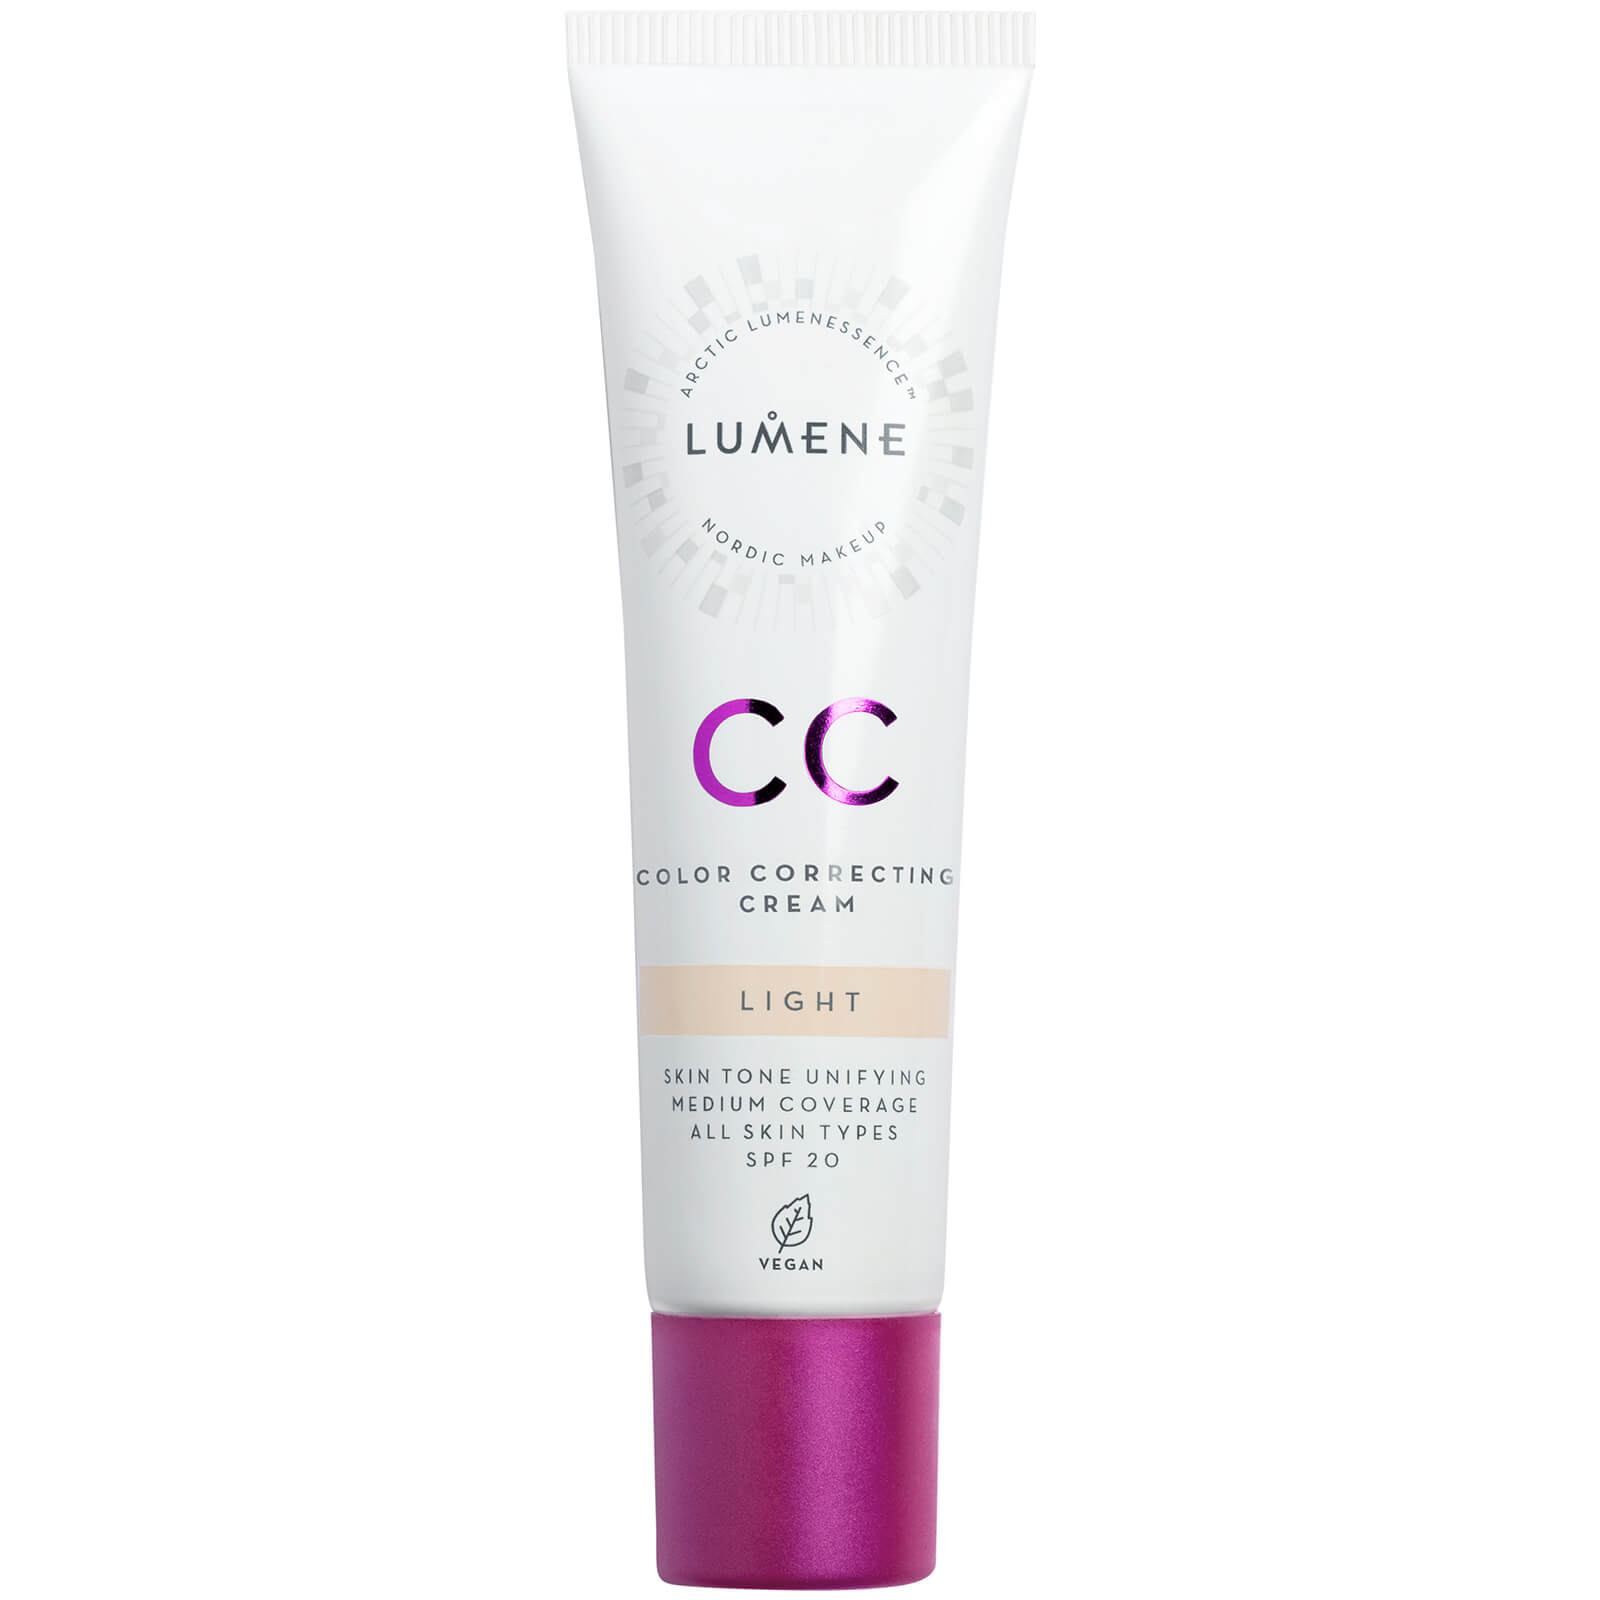 Lumene Cc Colour Correcting Cream Spf20 30ml (various Shades) - Light